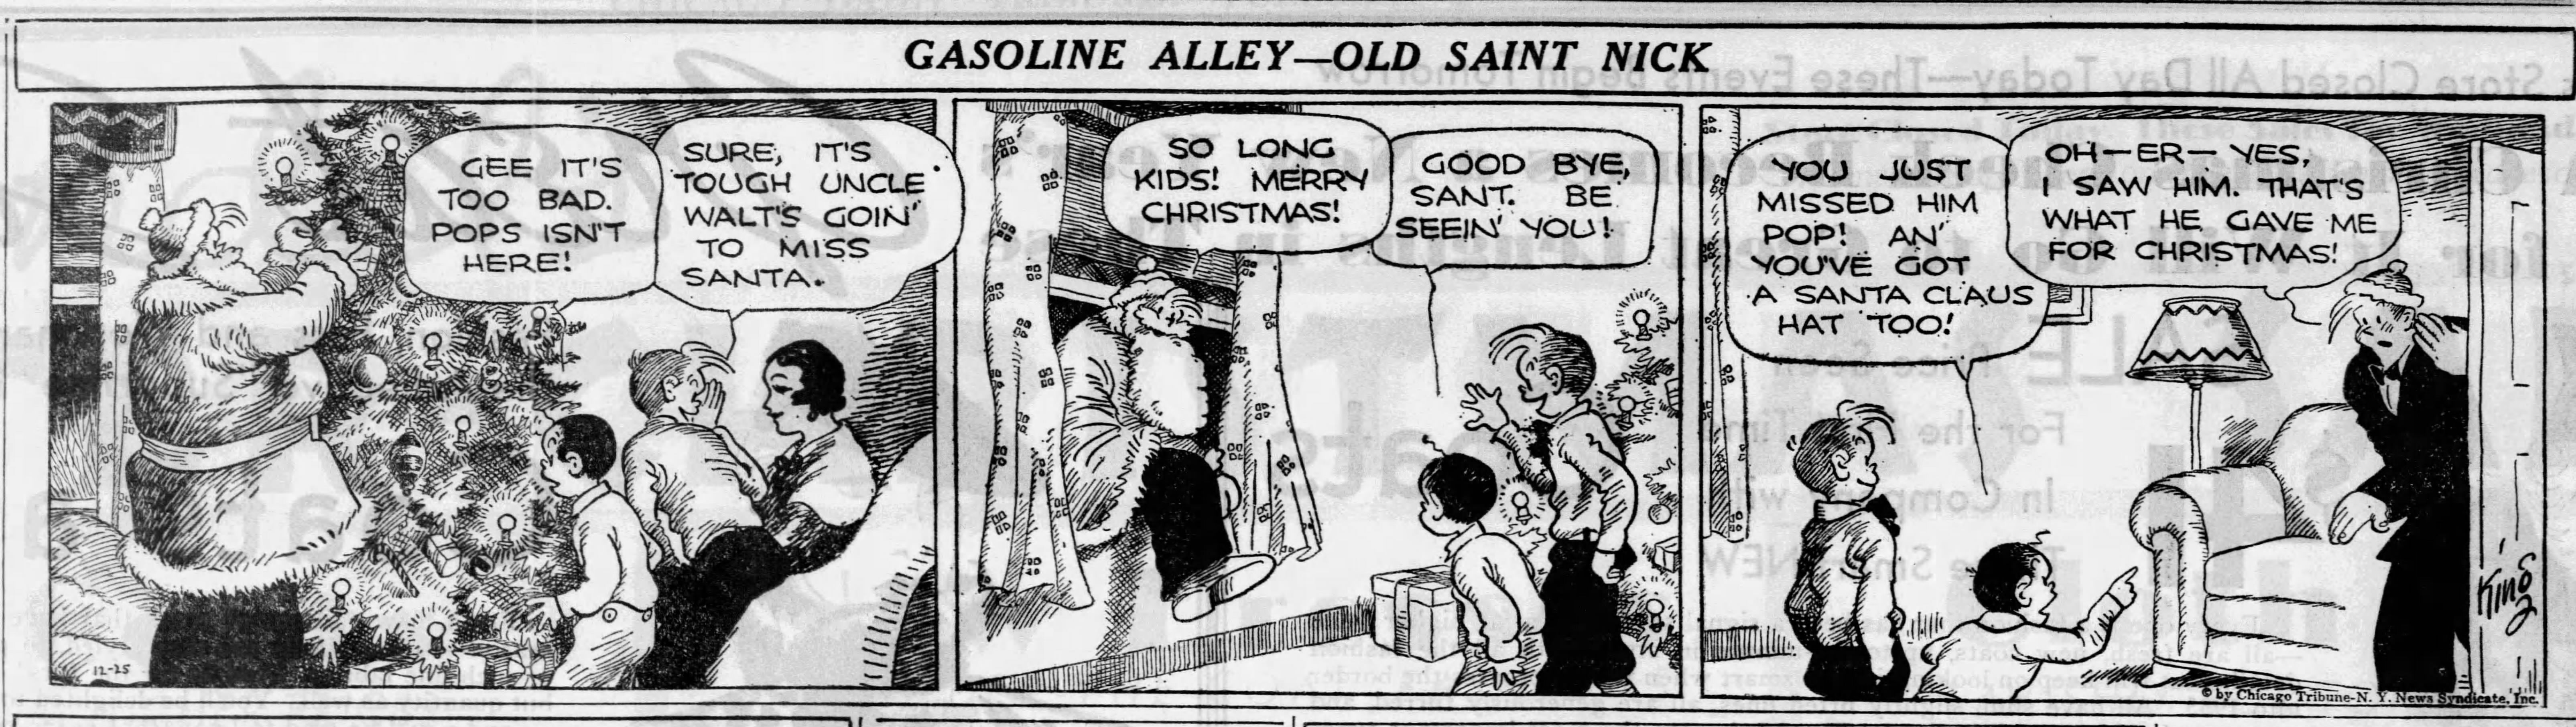 gasoline-alley-christmas-4